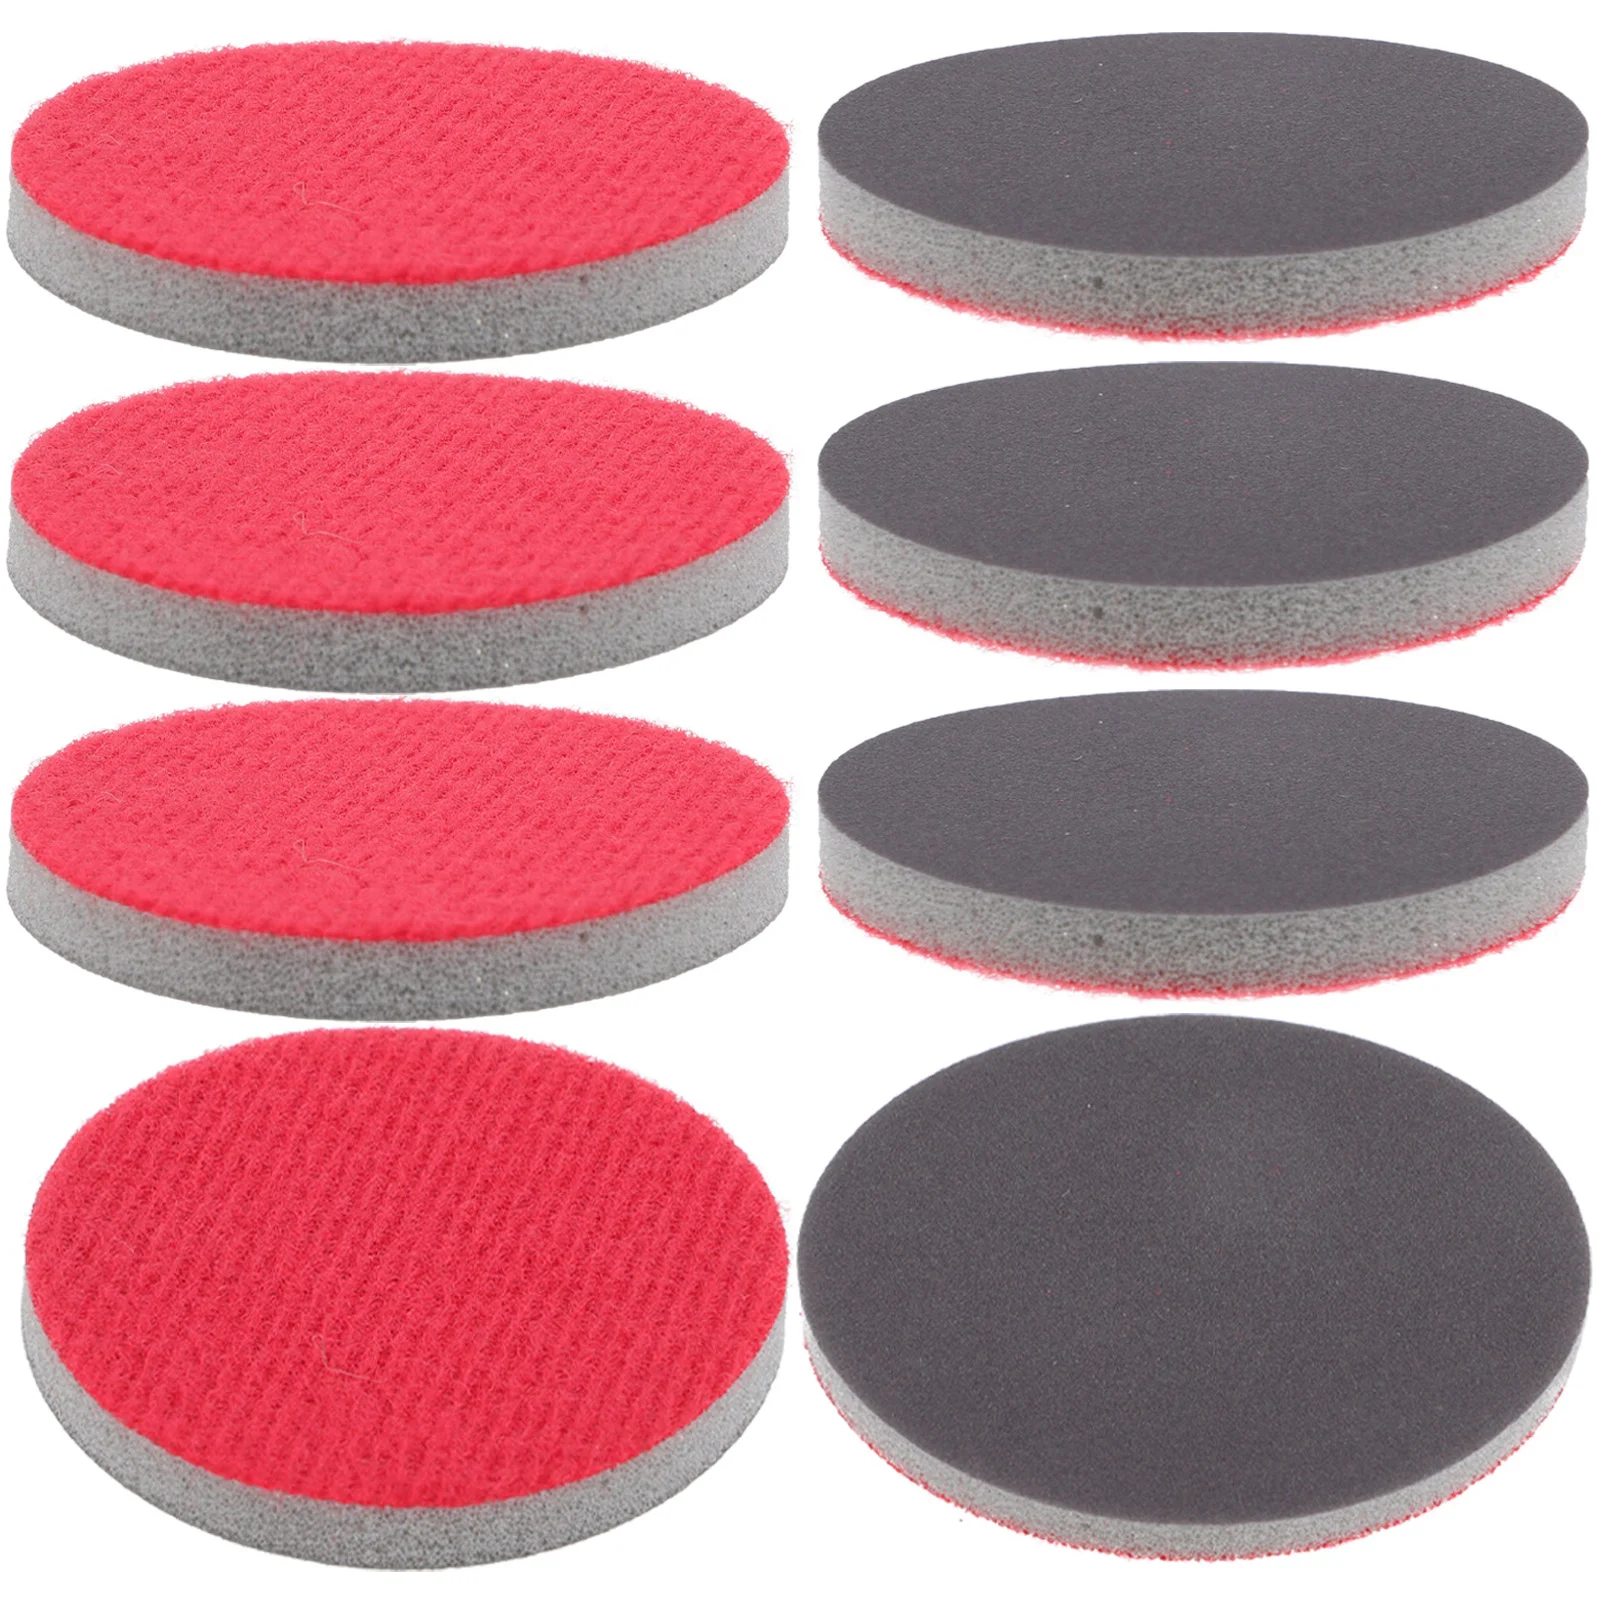 

8 Pcs Bowling Ball Polishing Pad Men Car Accessories Cleaning Pads Sponge Compact Man Cleaner Cushion Supplies